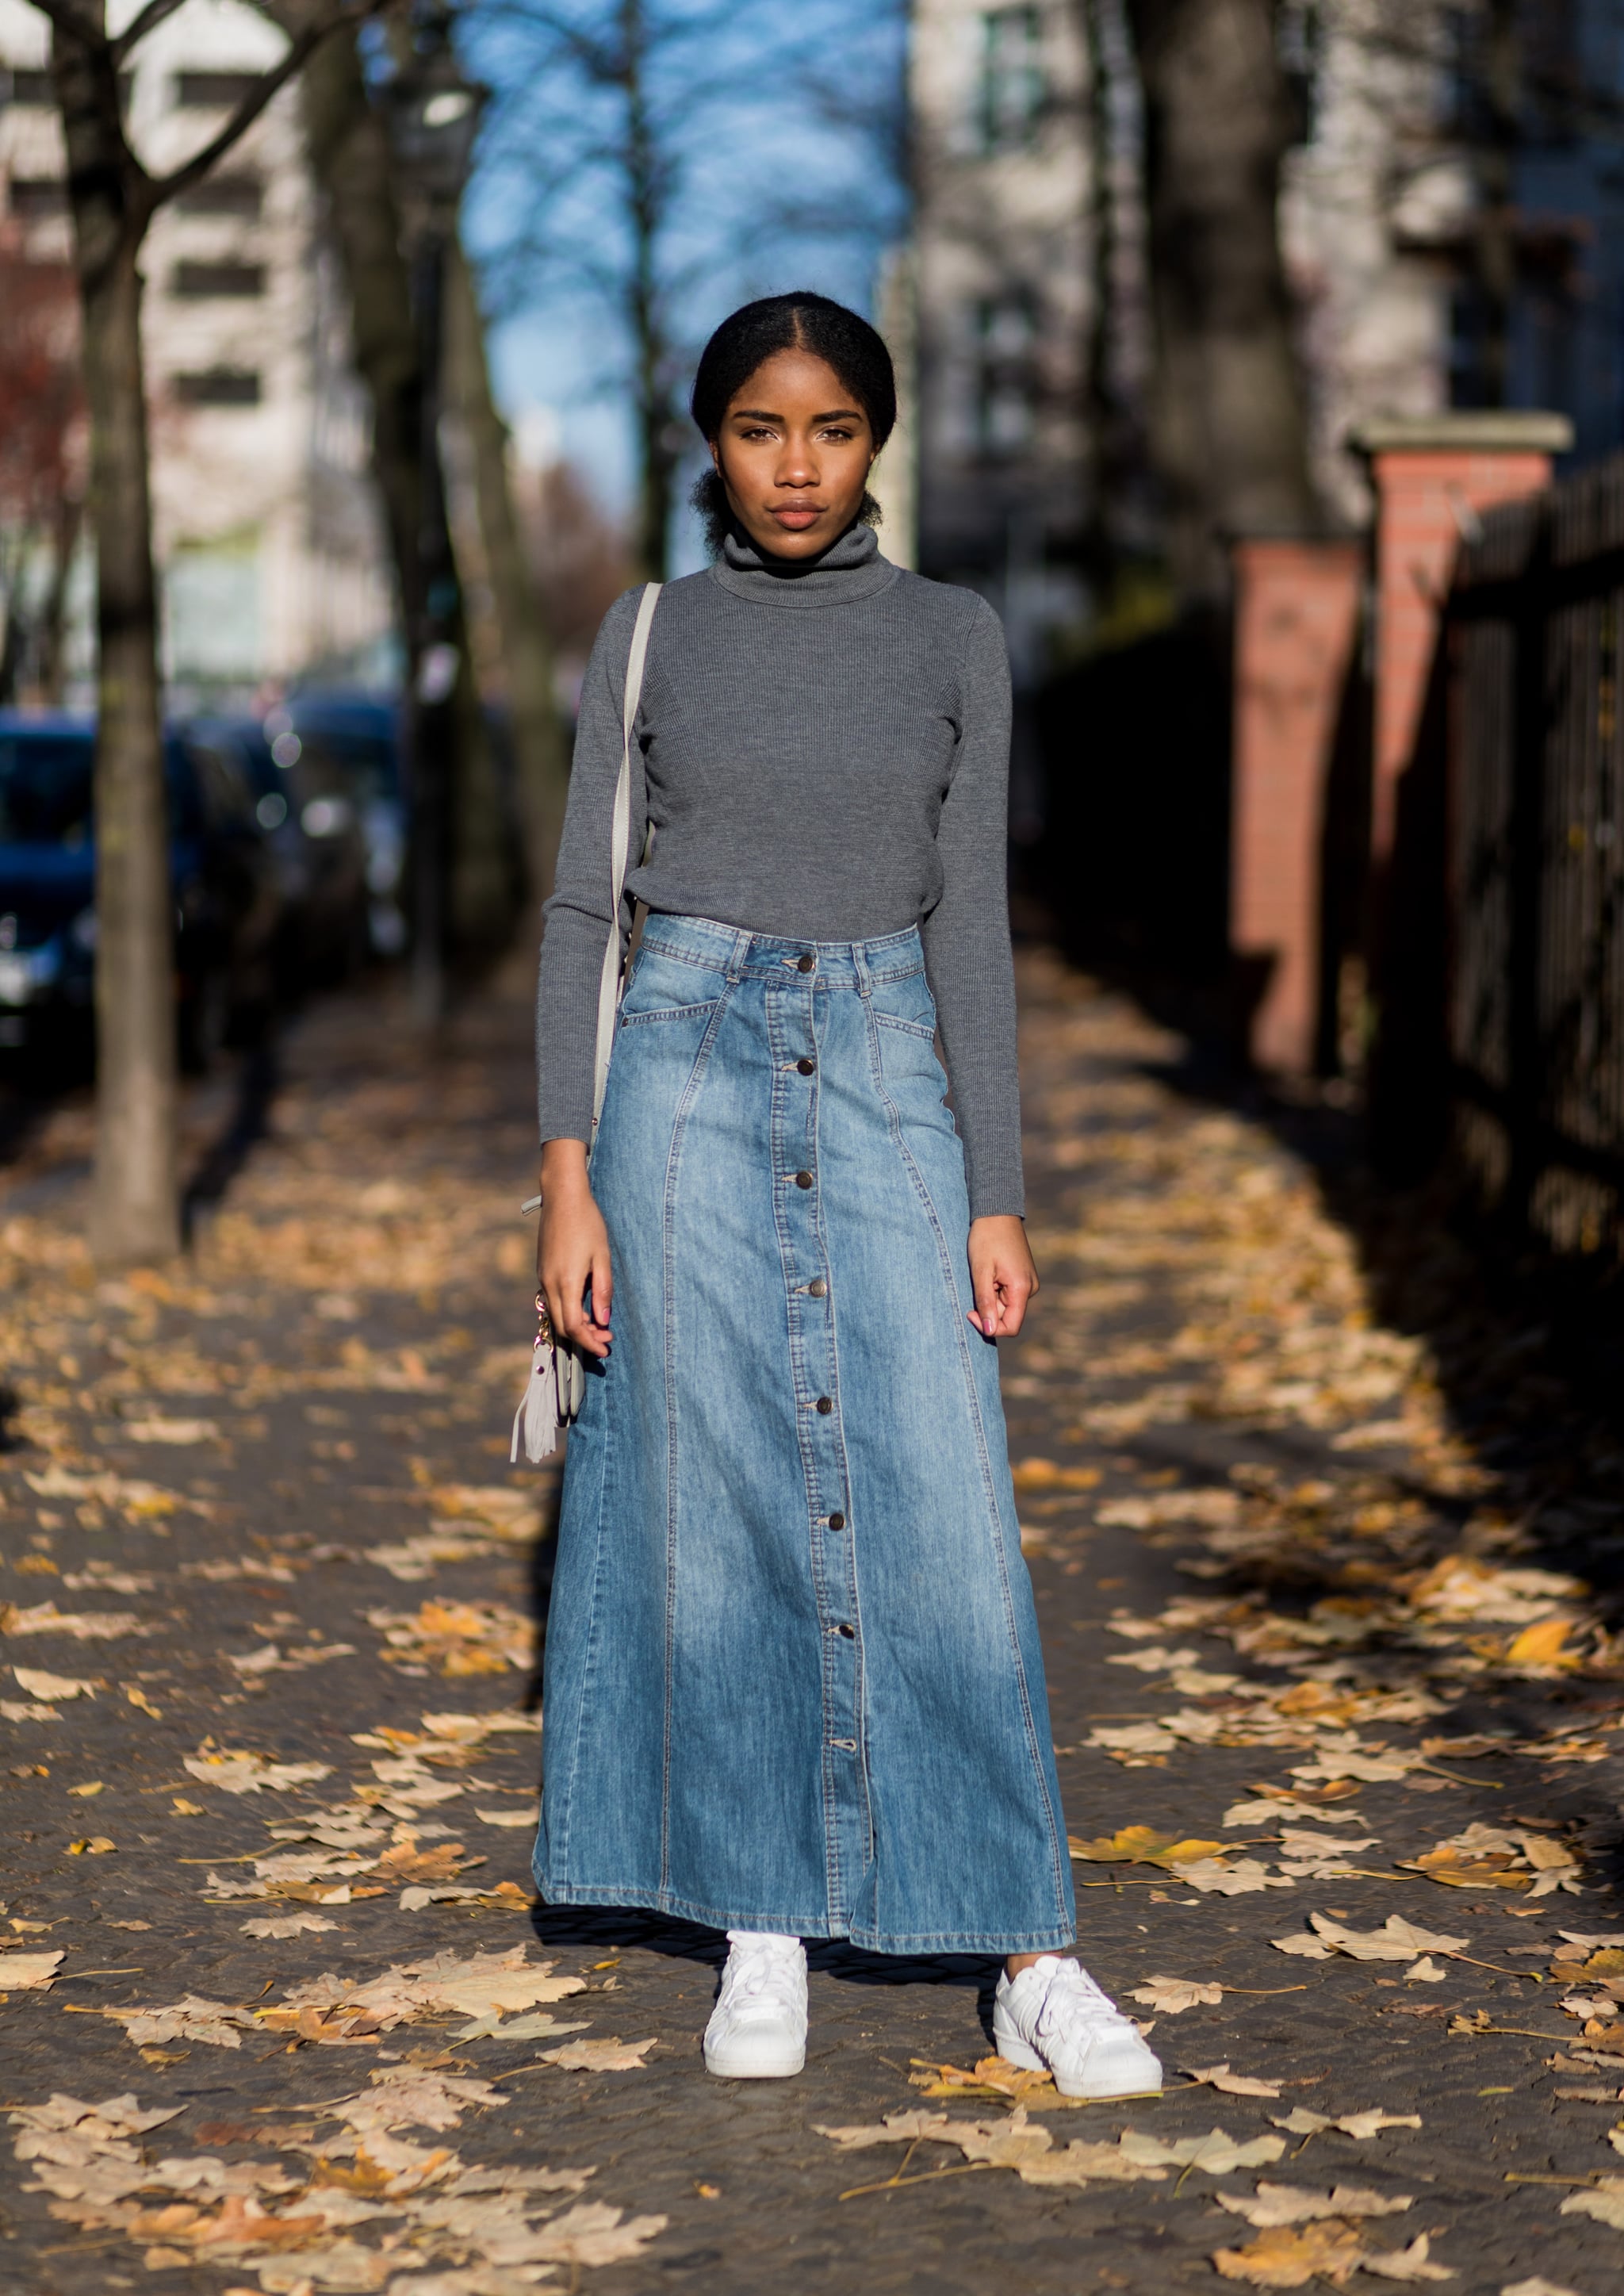 How to Wear a Denim Skirt For Fall | POPSUGAR Fashion